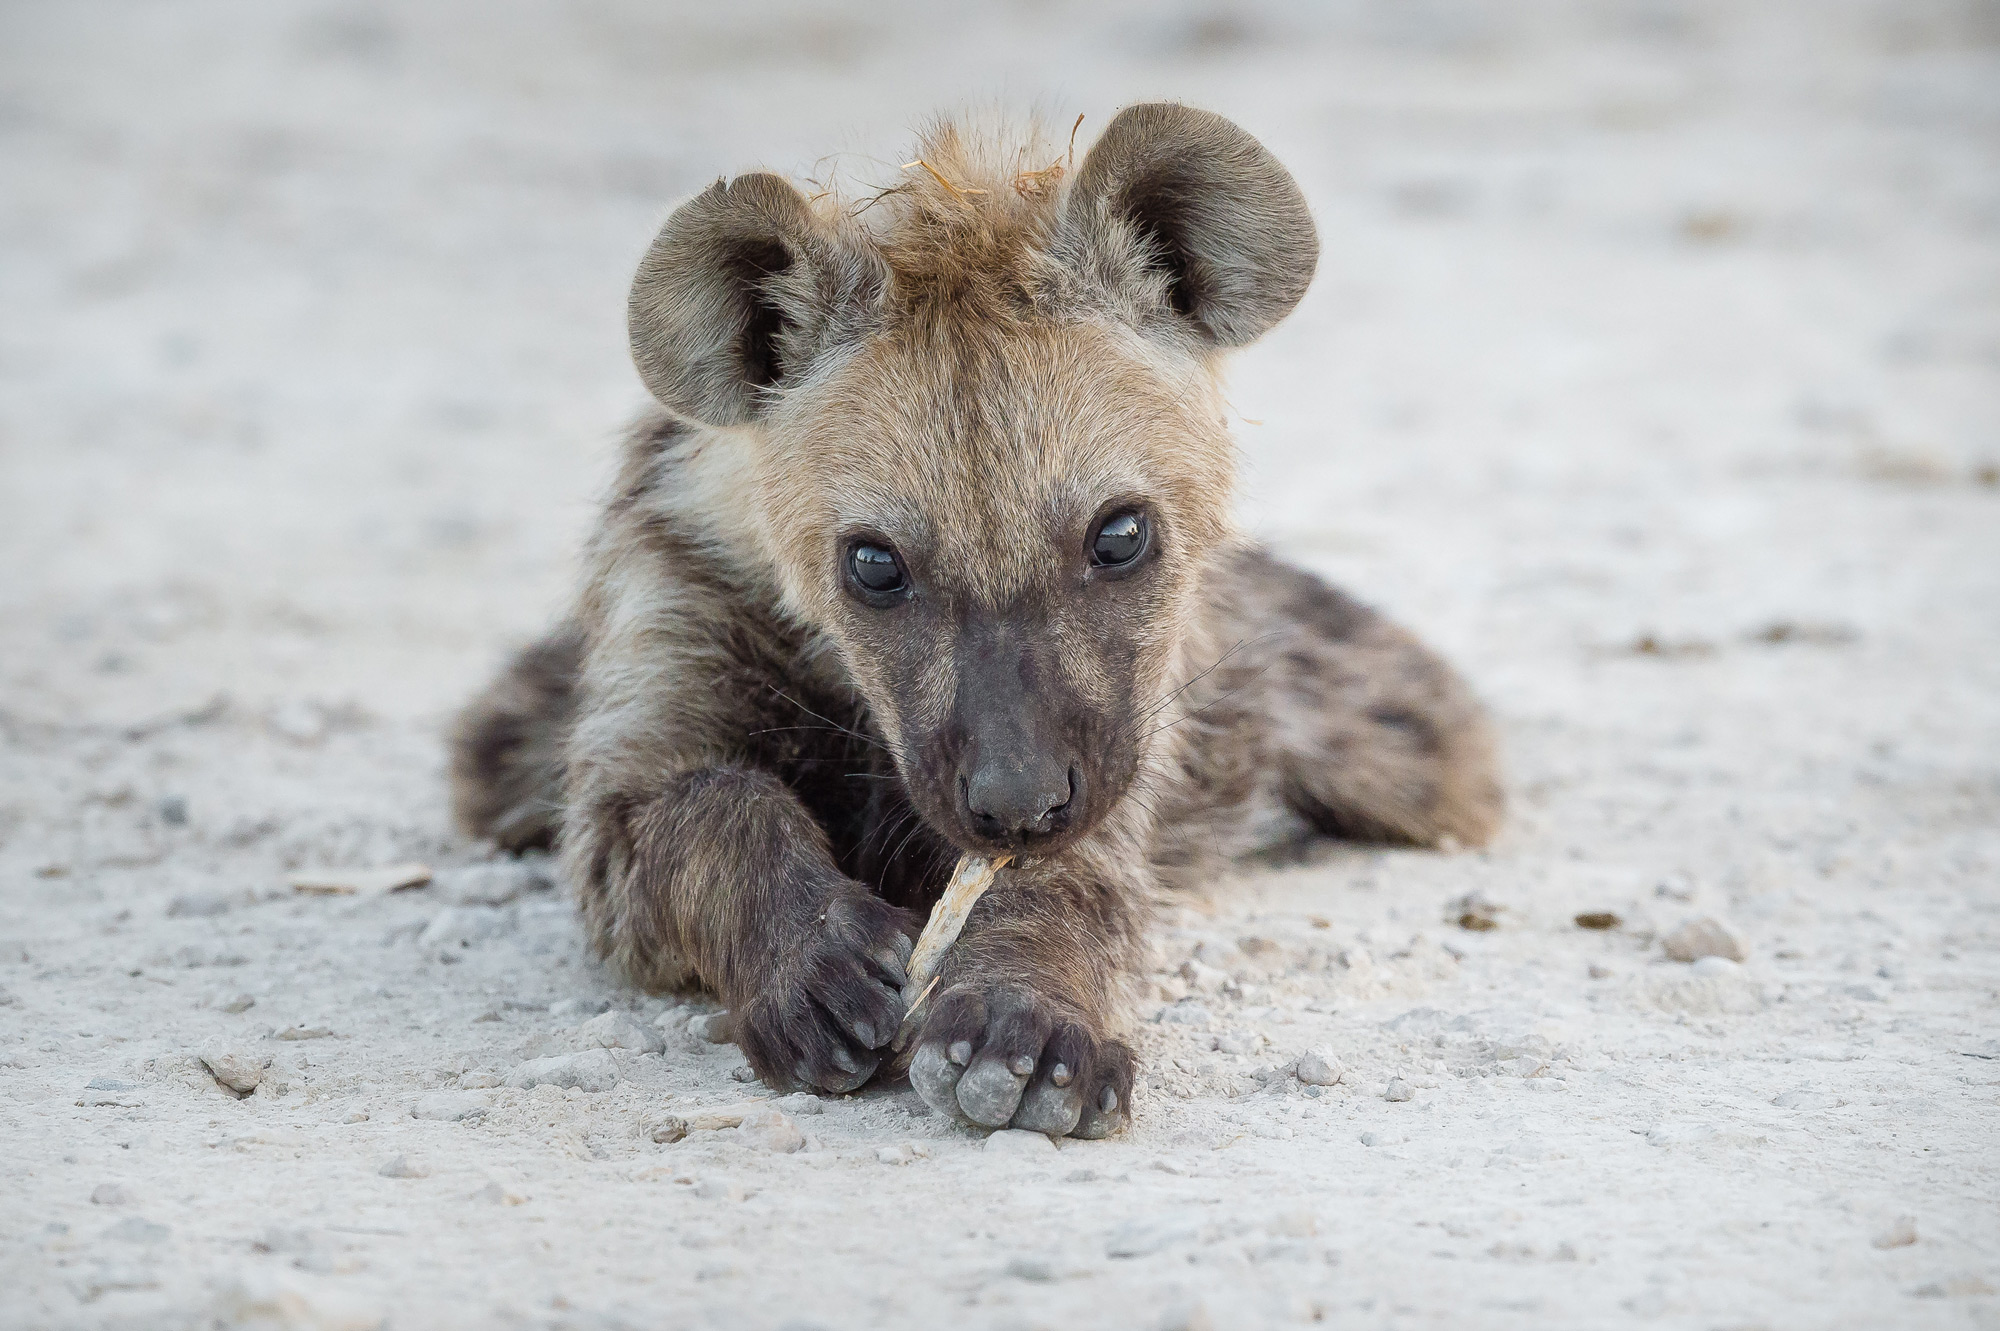 A hyena cub in Etosha National Park, Namibia